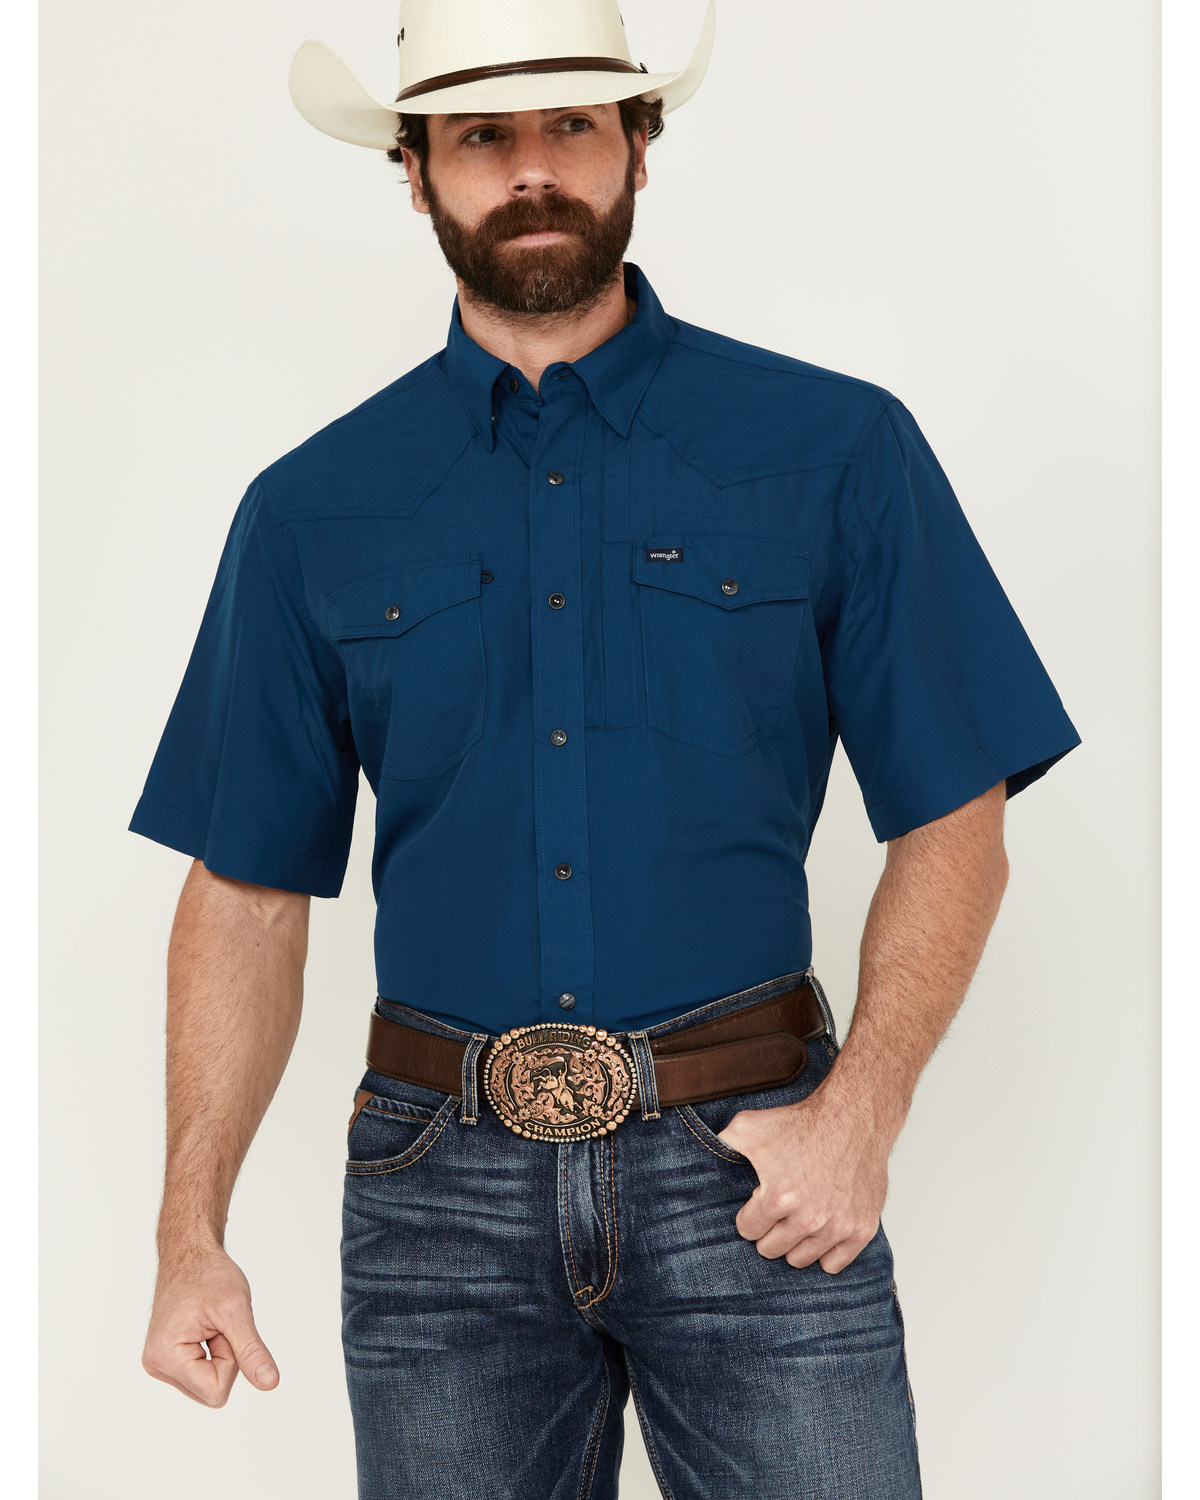 Wrangler Men's Solid Long Sleeve Snap Performance Western Shirt - Tall